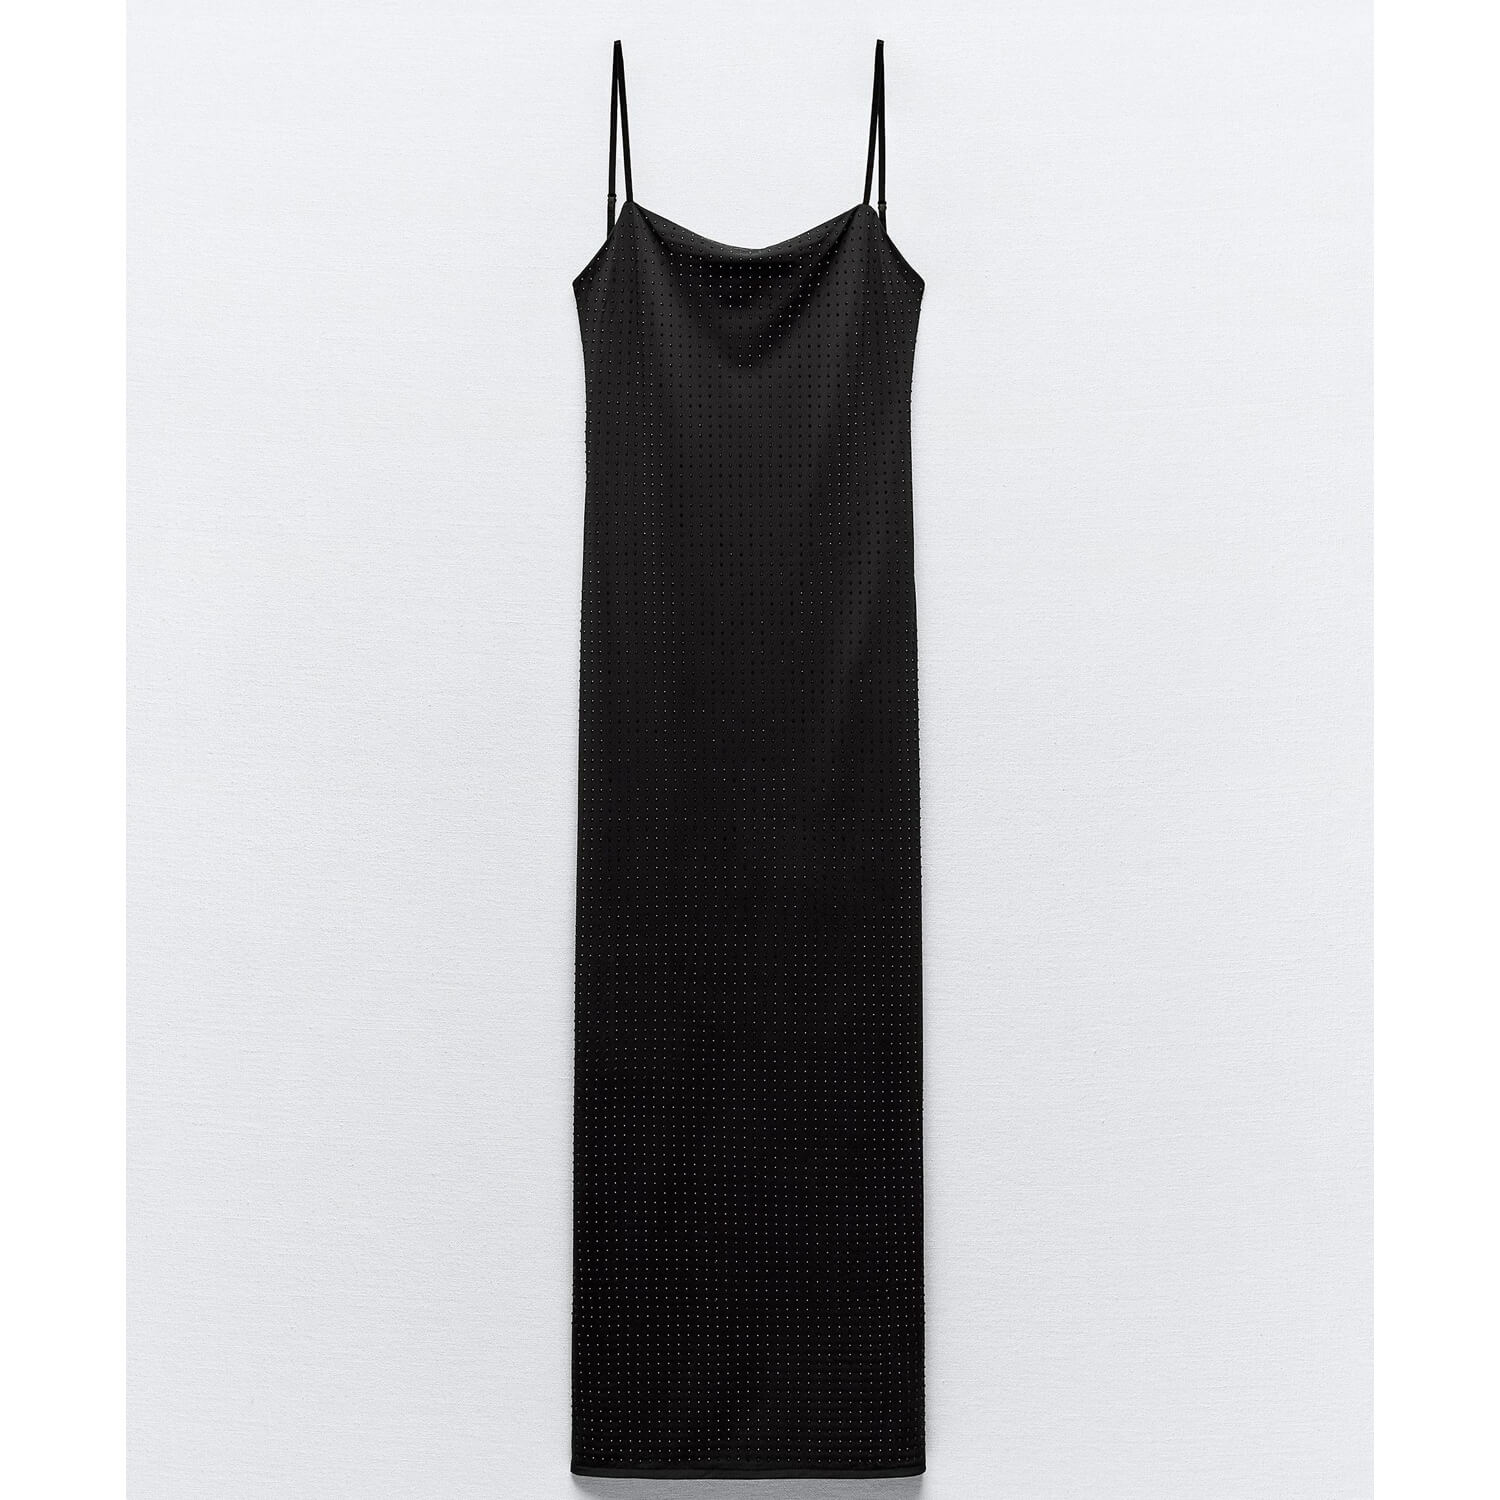 Платье Zara Polyamide Midi With Rhinestones, черный платье zara polyamide with rhinestones черный